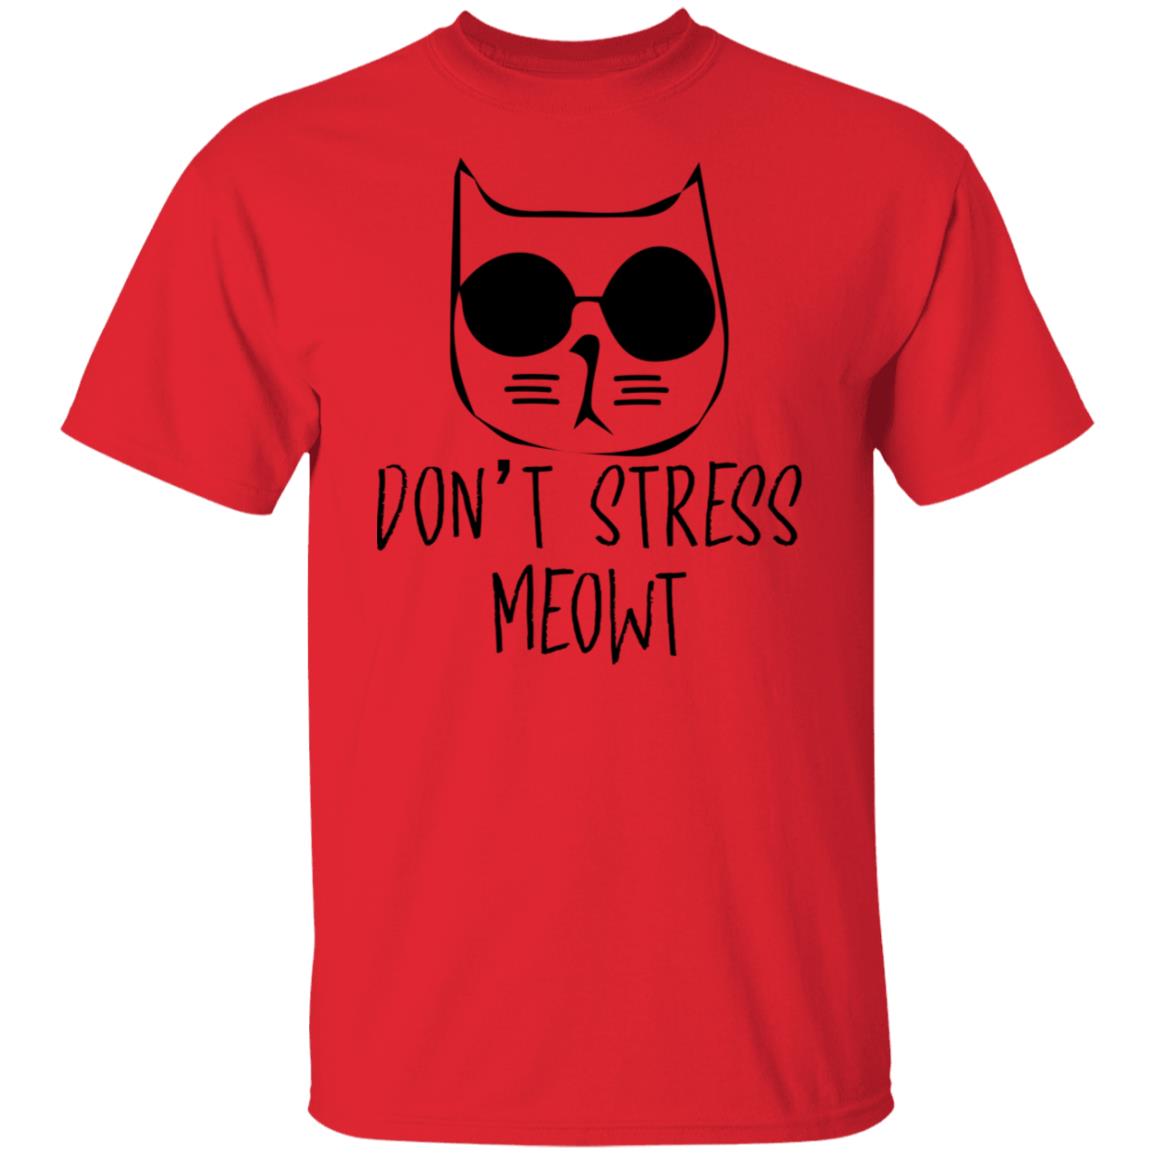 Don't stress Meowt tshirt